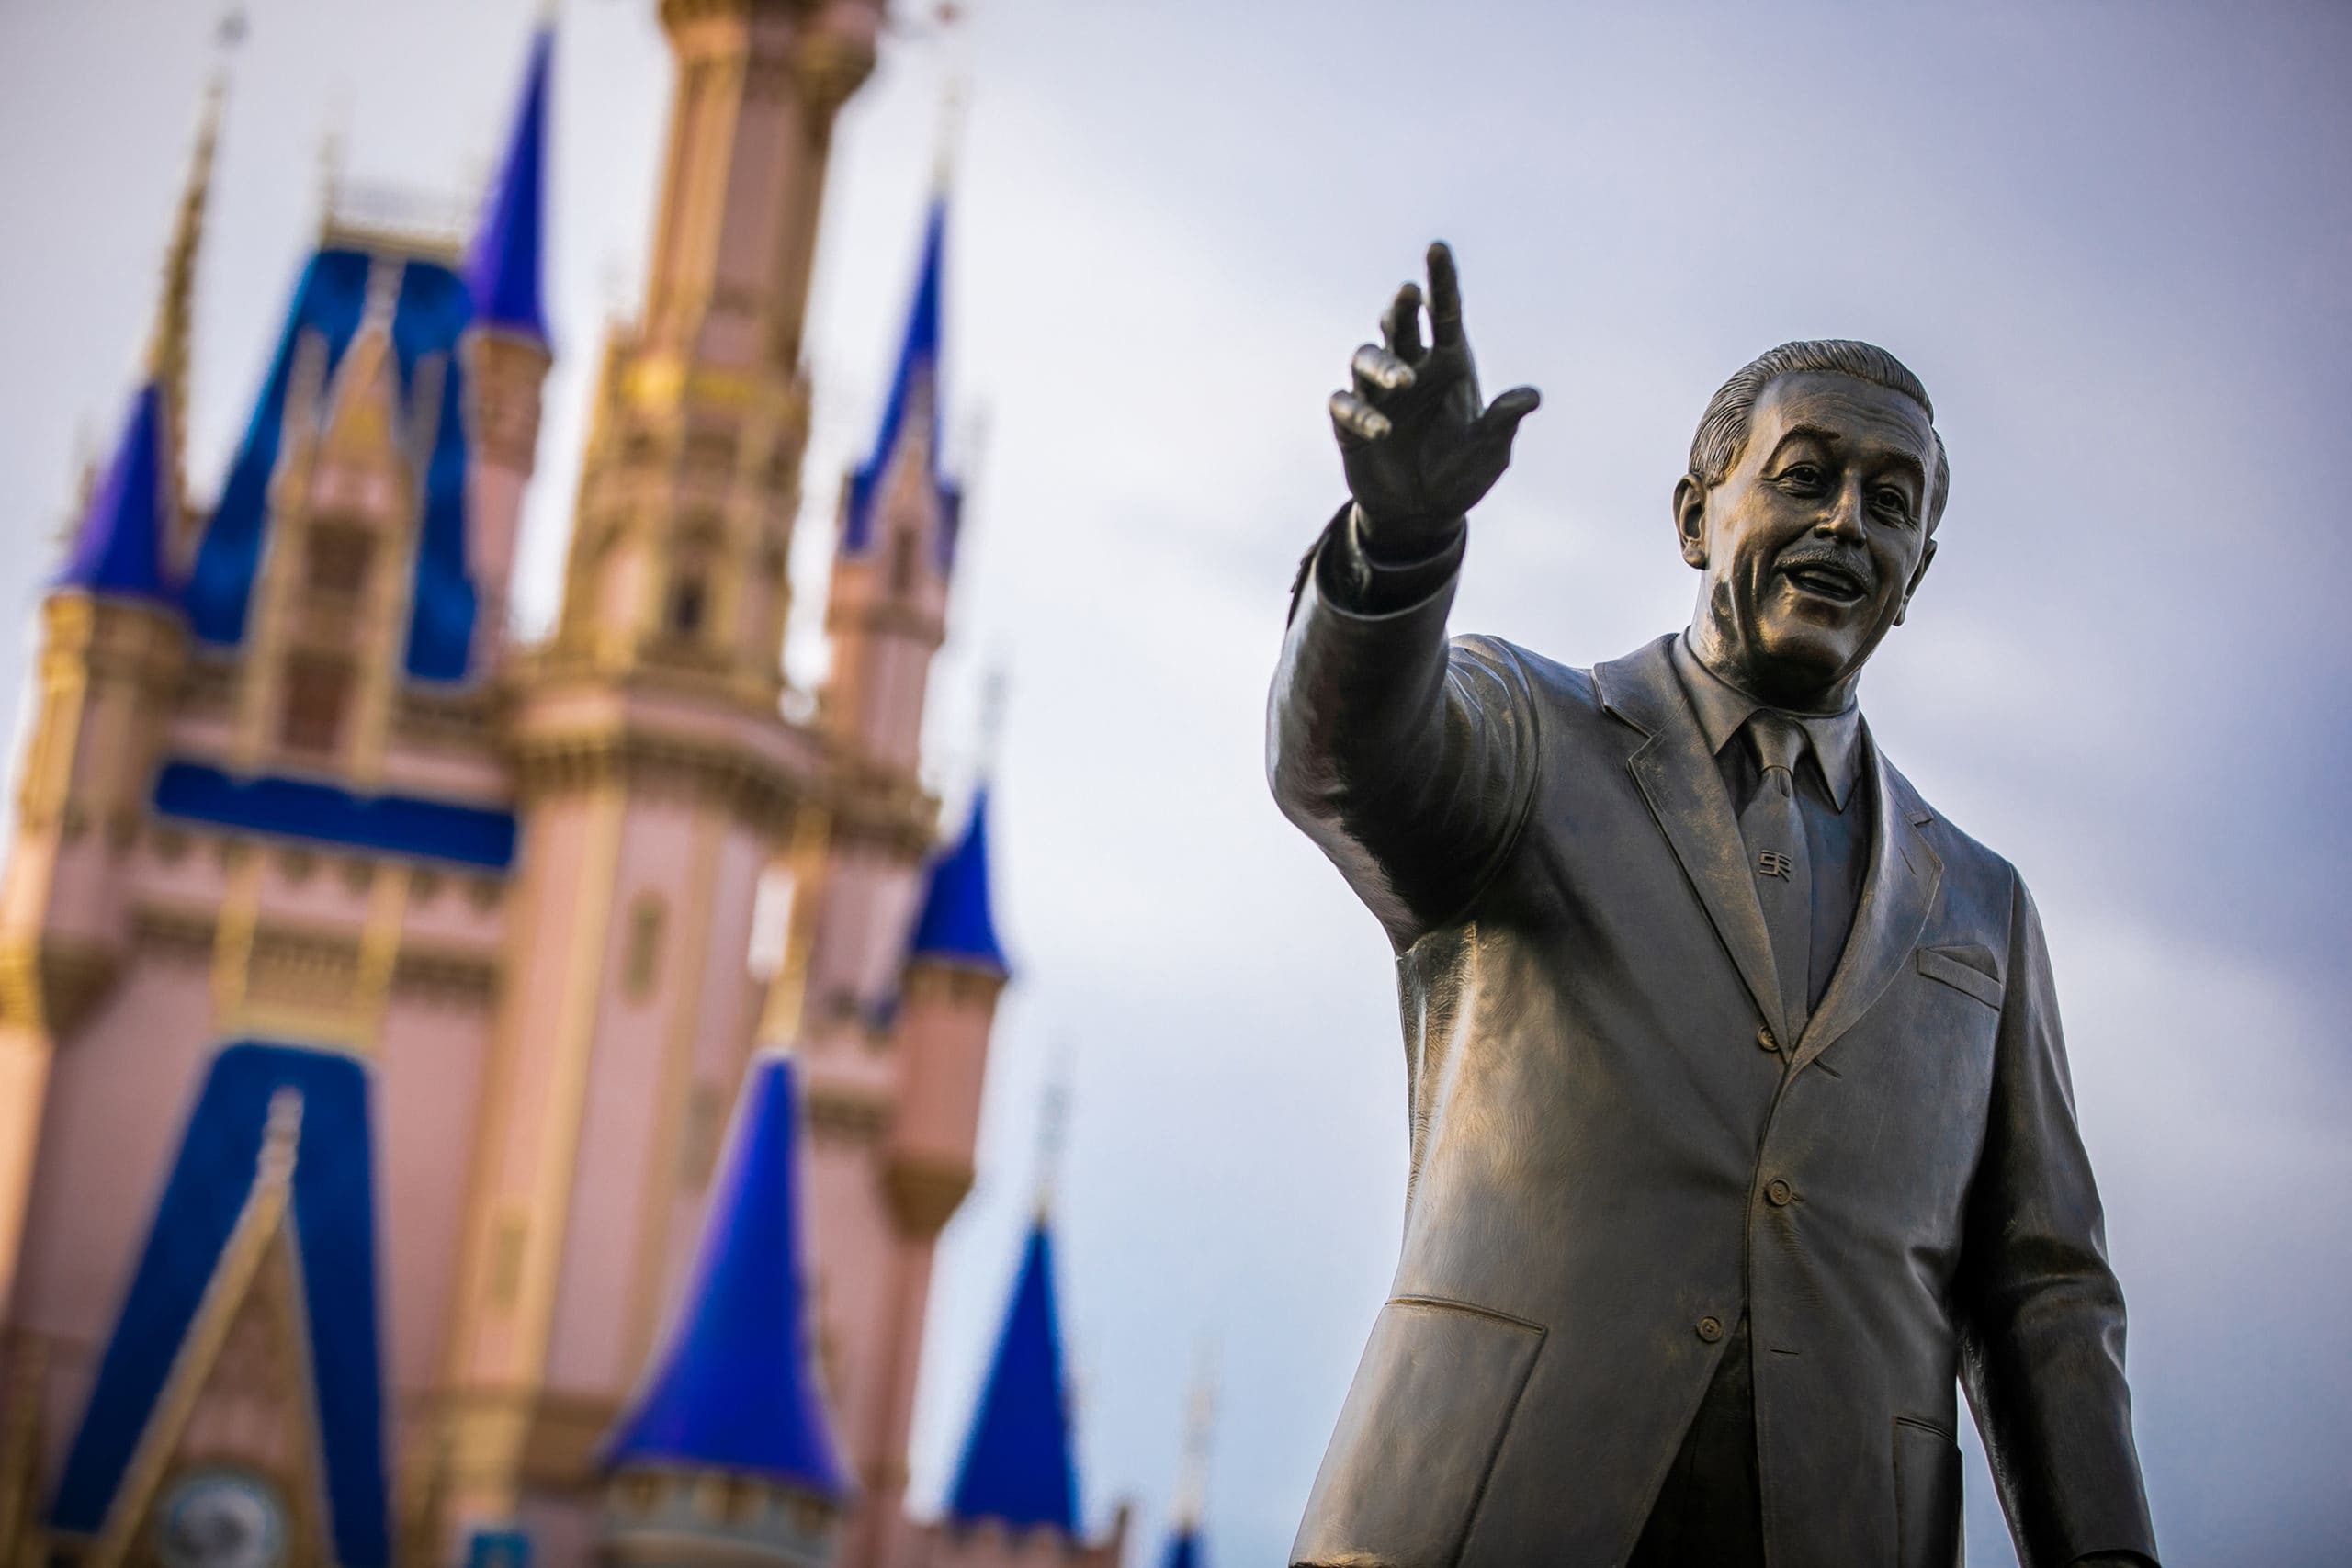 Disney Drops Plans to Build New Florida Campus